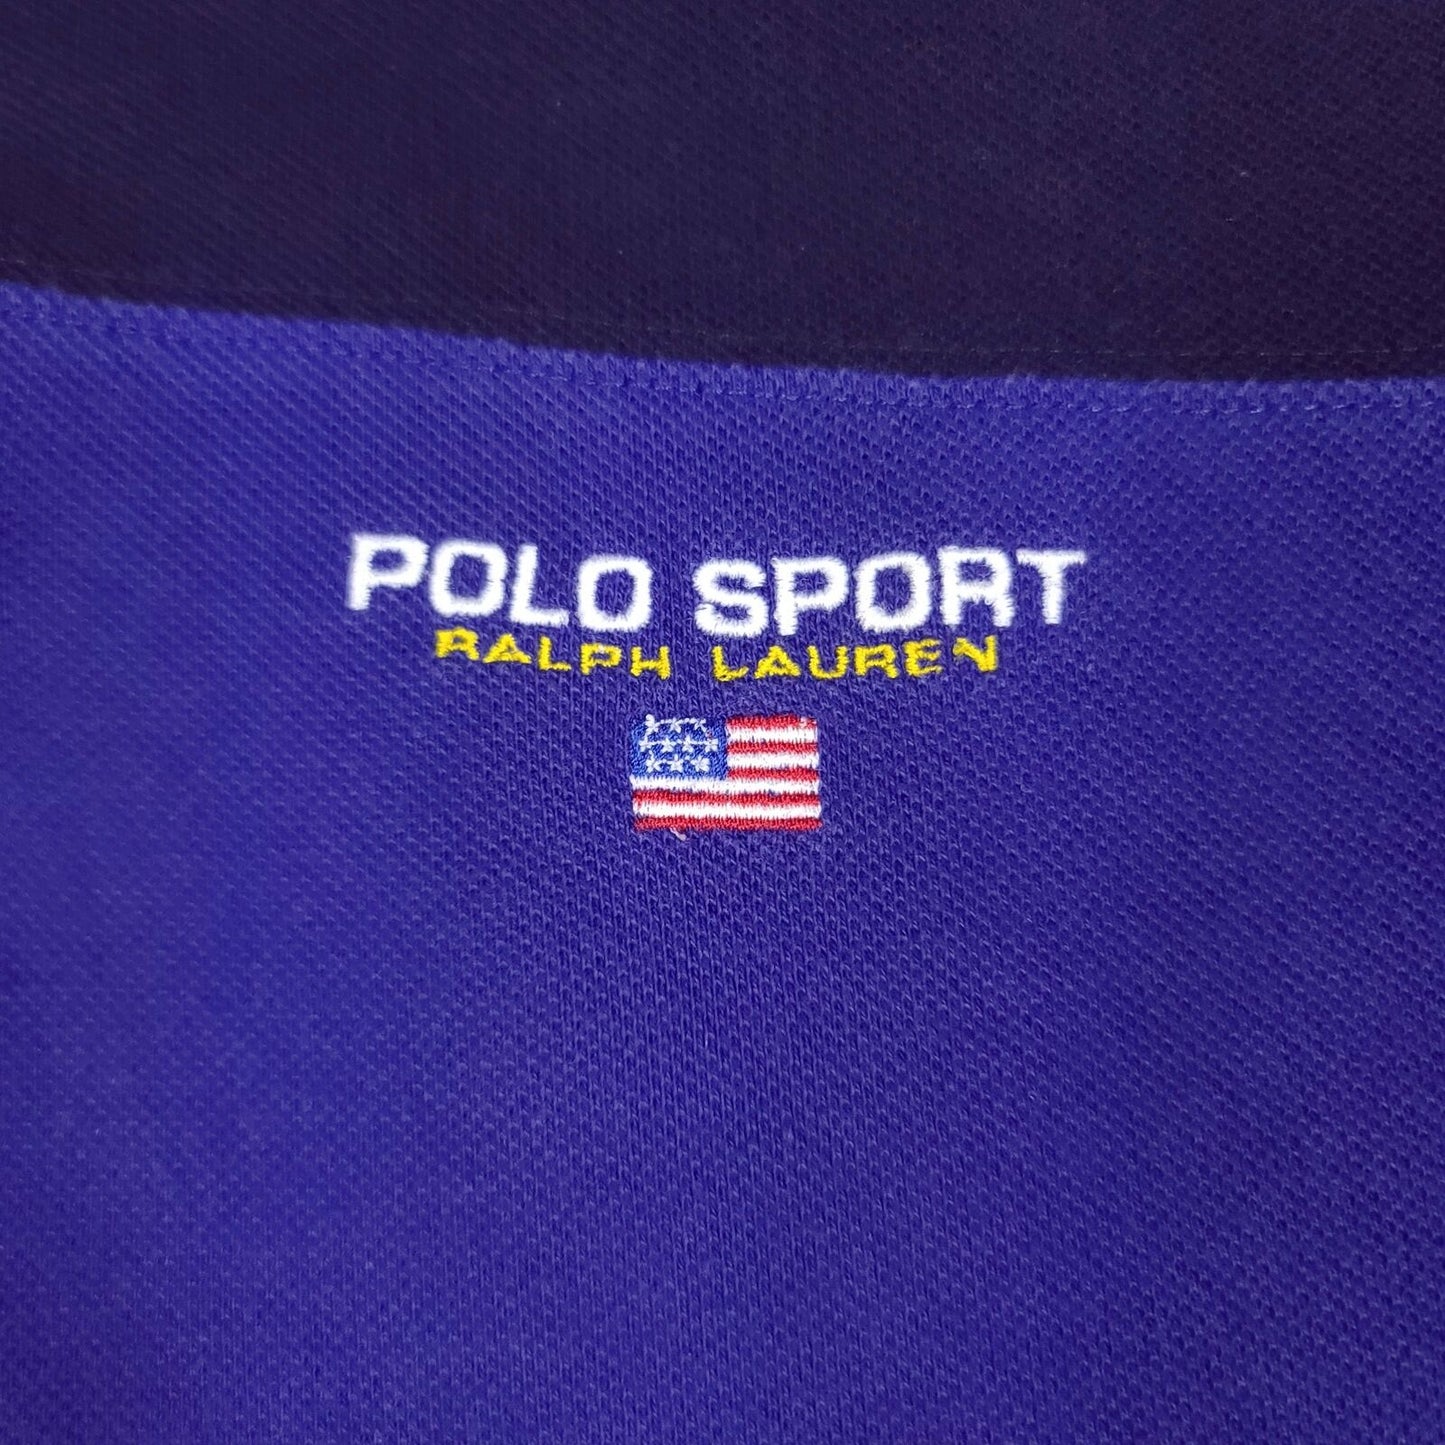 Polo Sport Ralph Lauren Blue Color Block Polo